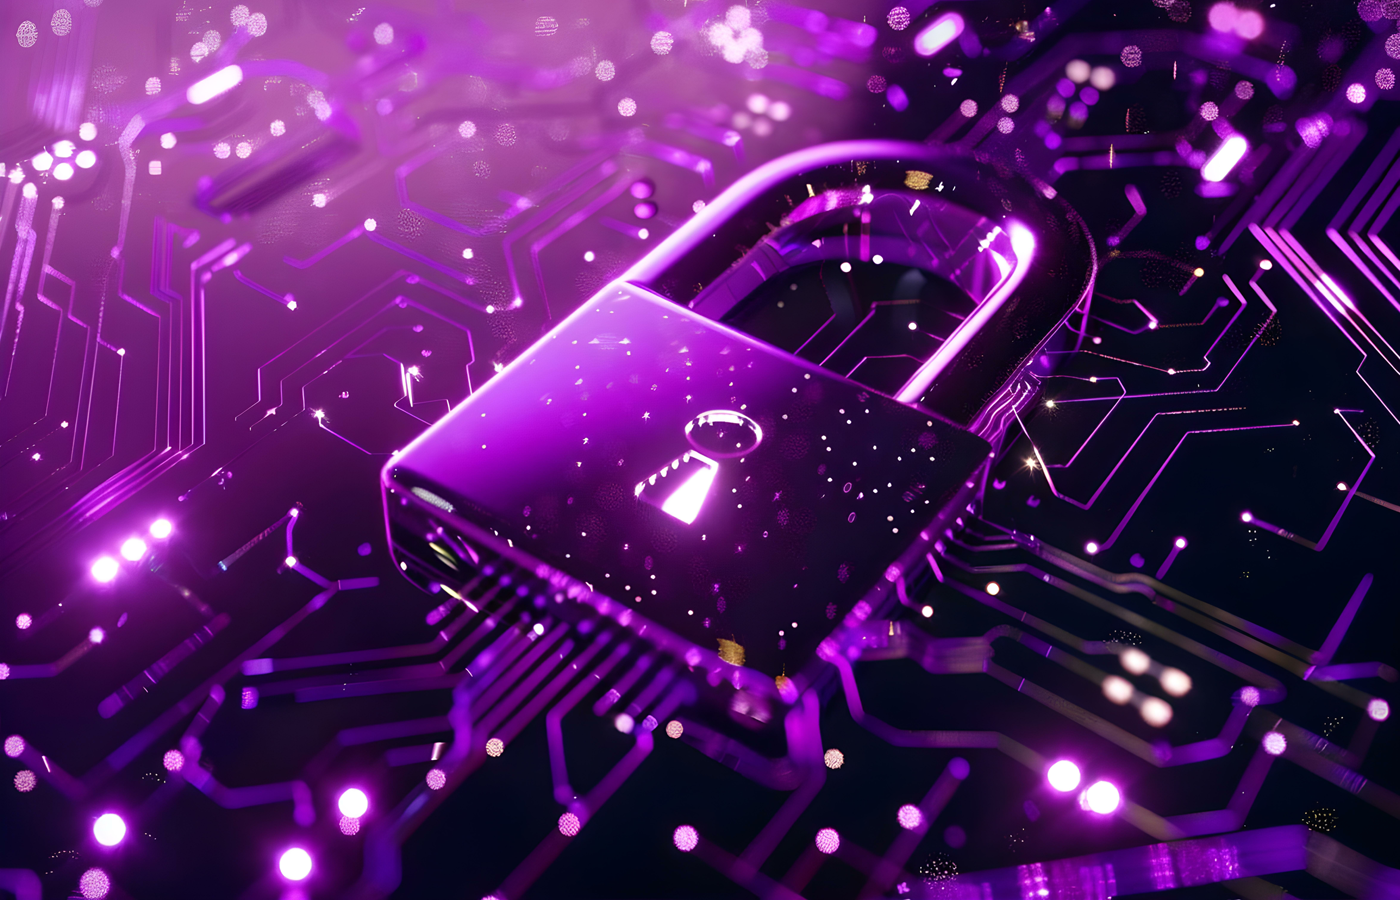 Neon purple cybersecurity padlock on circuit board background.